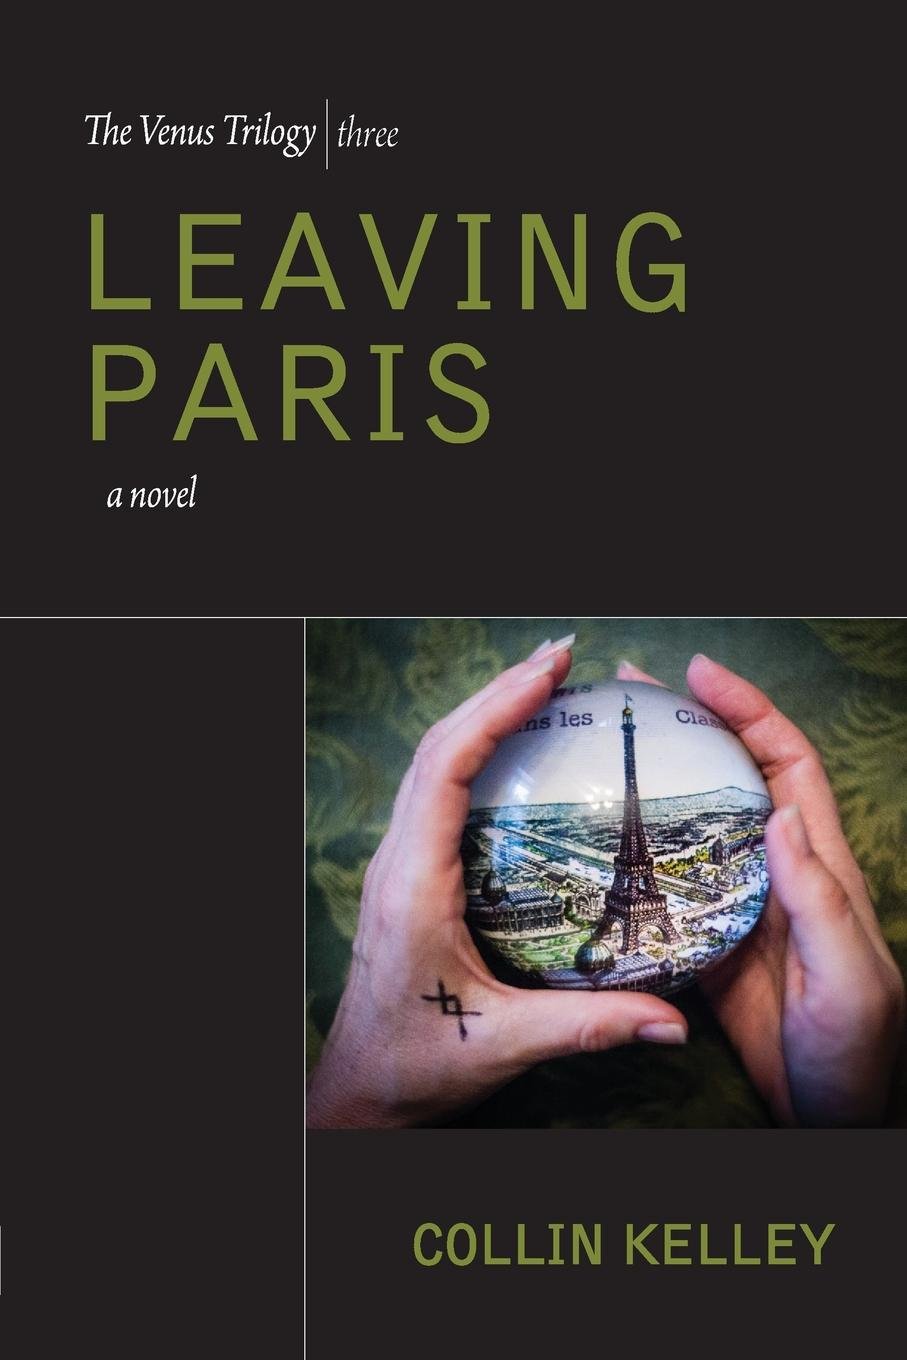 Leaving Paris: The Venus Trilogy Book Three by Collin Kelley